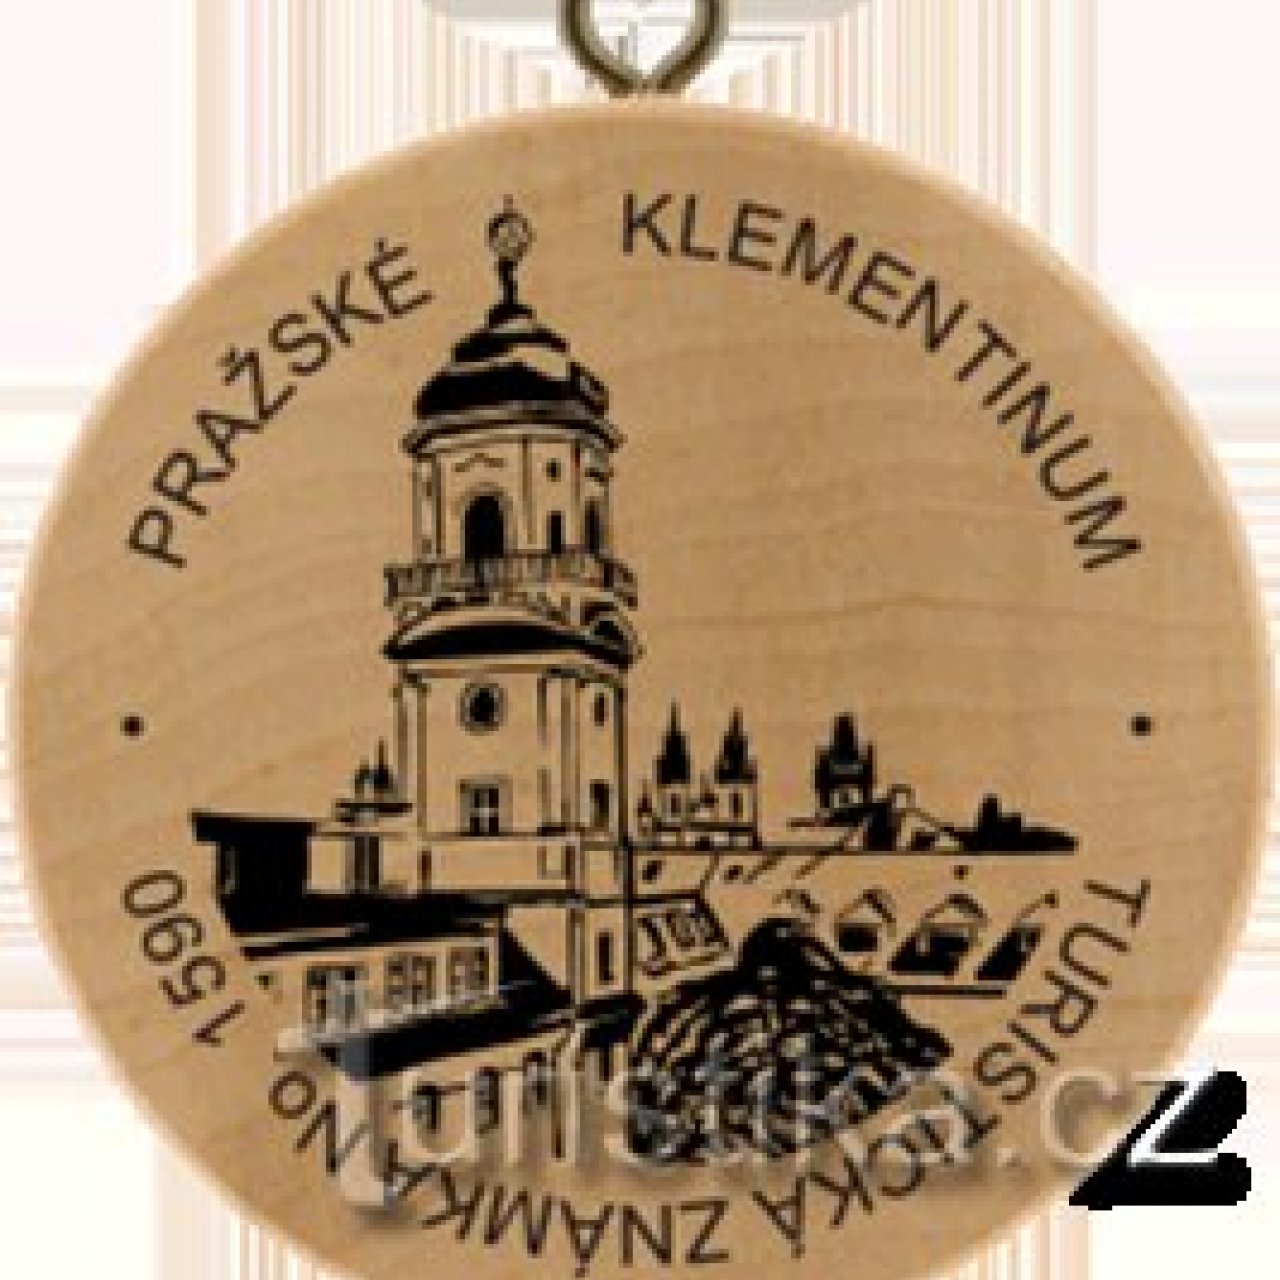 Turistická známka č. 1590 - Klementinum